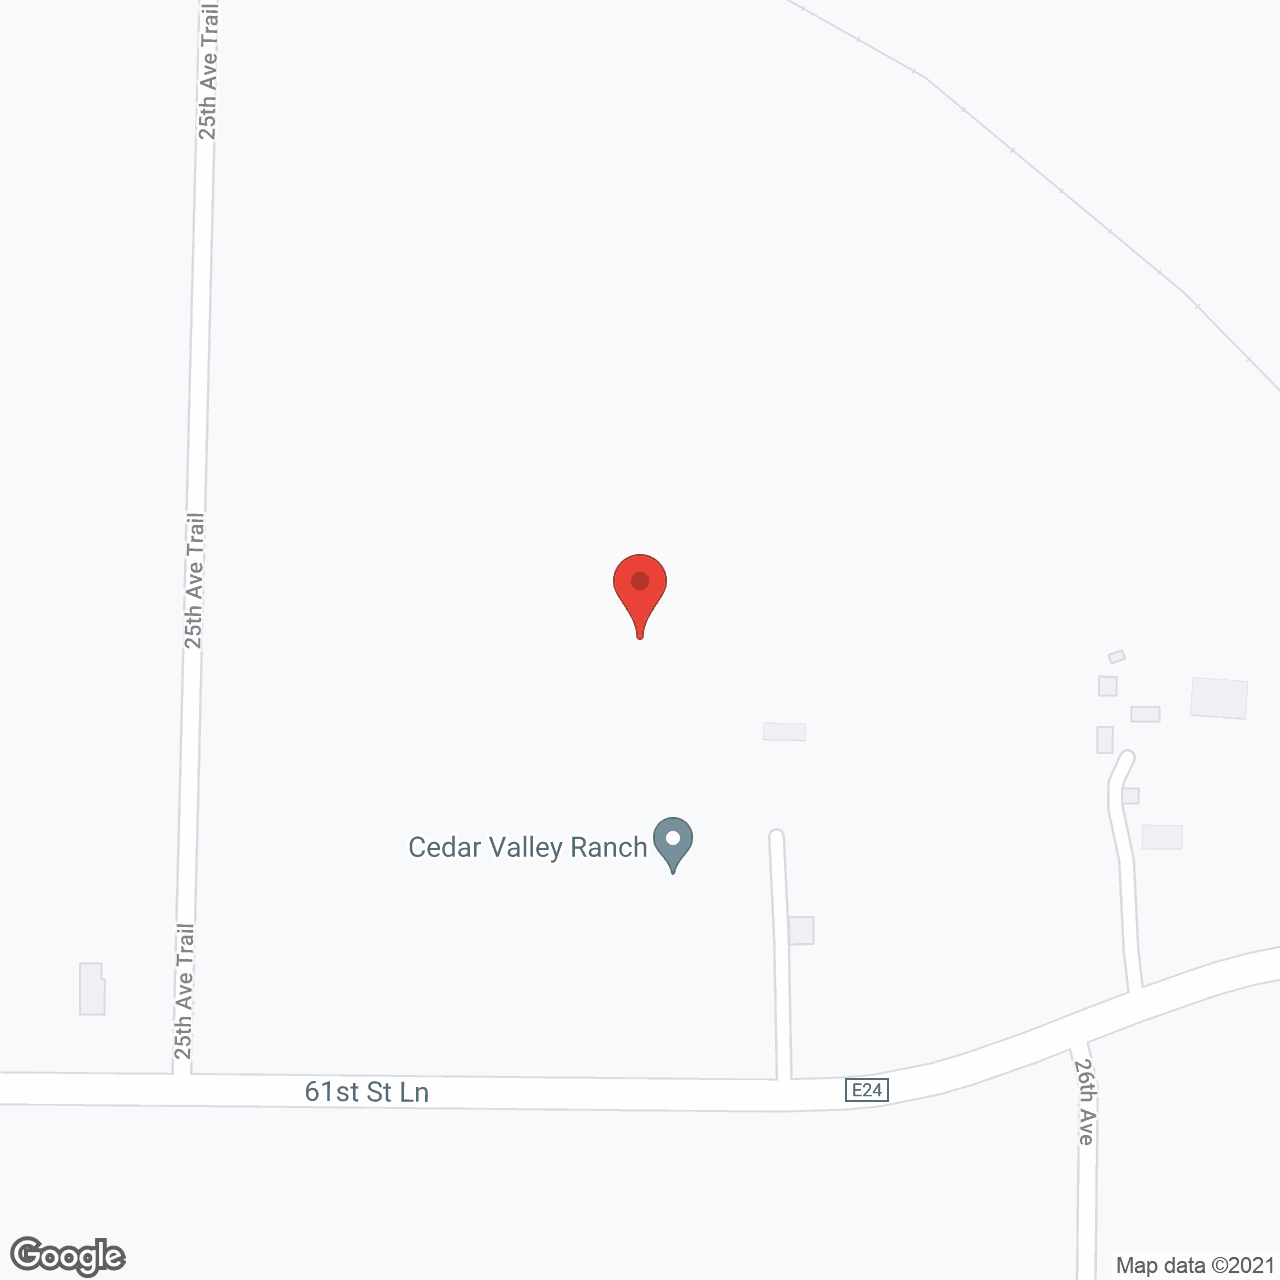 Cedar Valley Ranch in google map